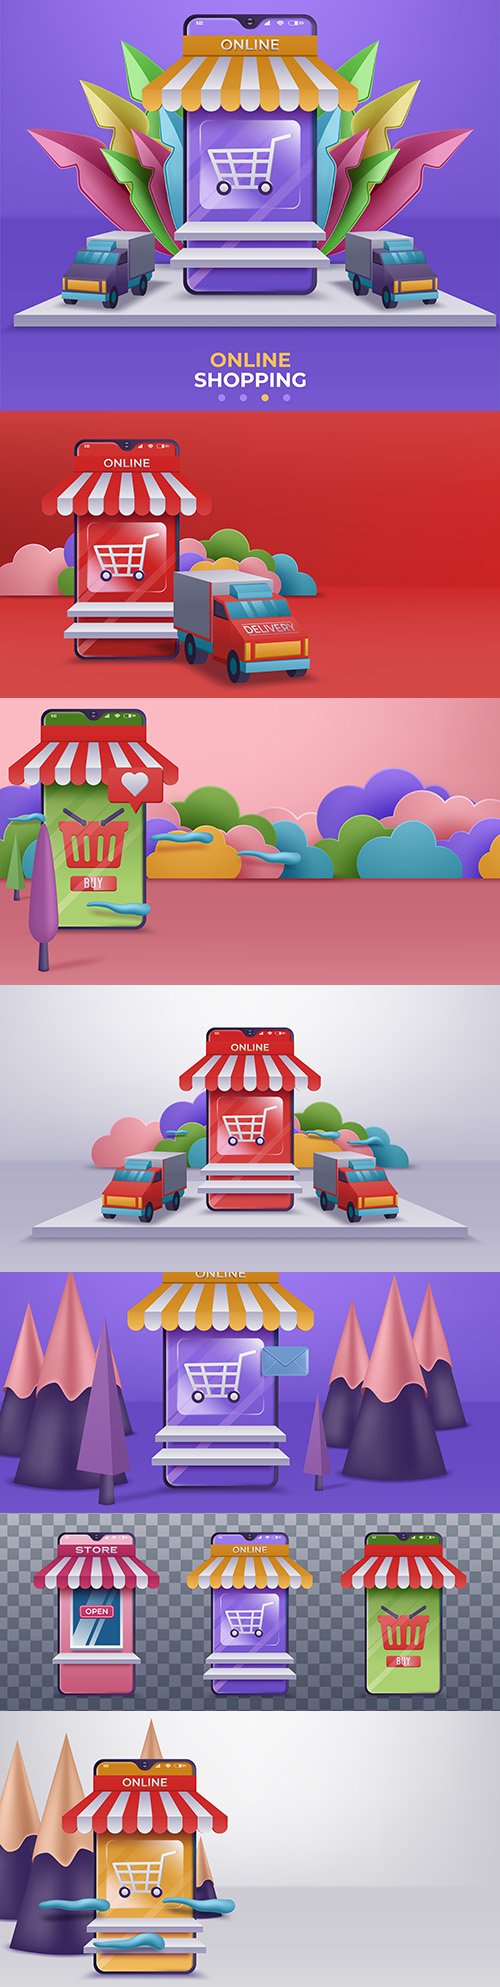 Online store and mobile application design 3d illustration